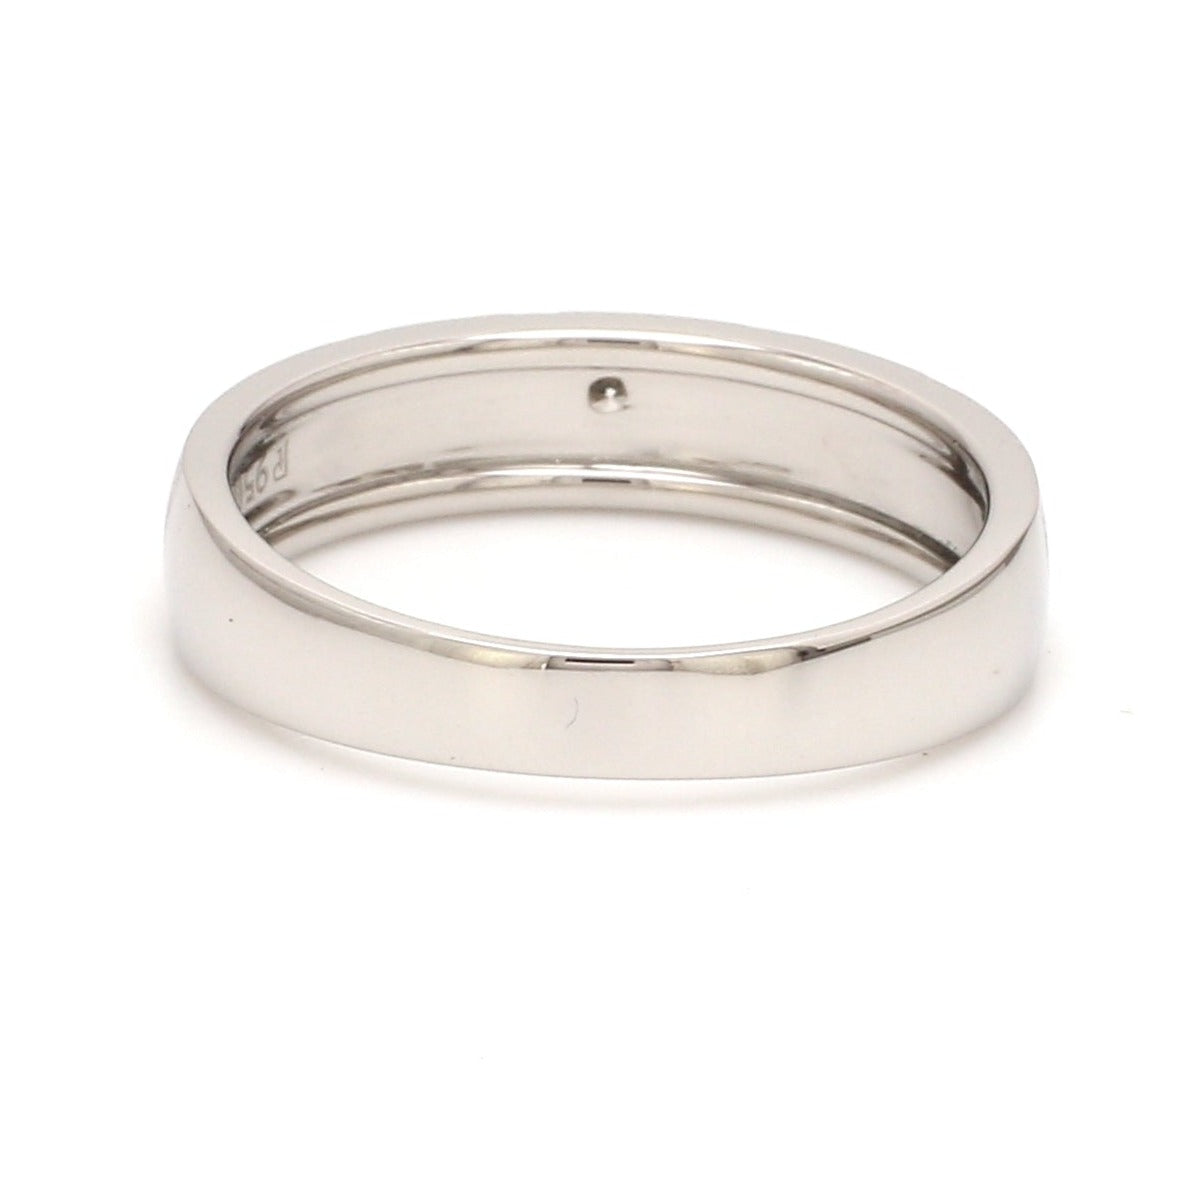 Back View of Designer Platinum Ring with Diamond for Men JL PT 1125